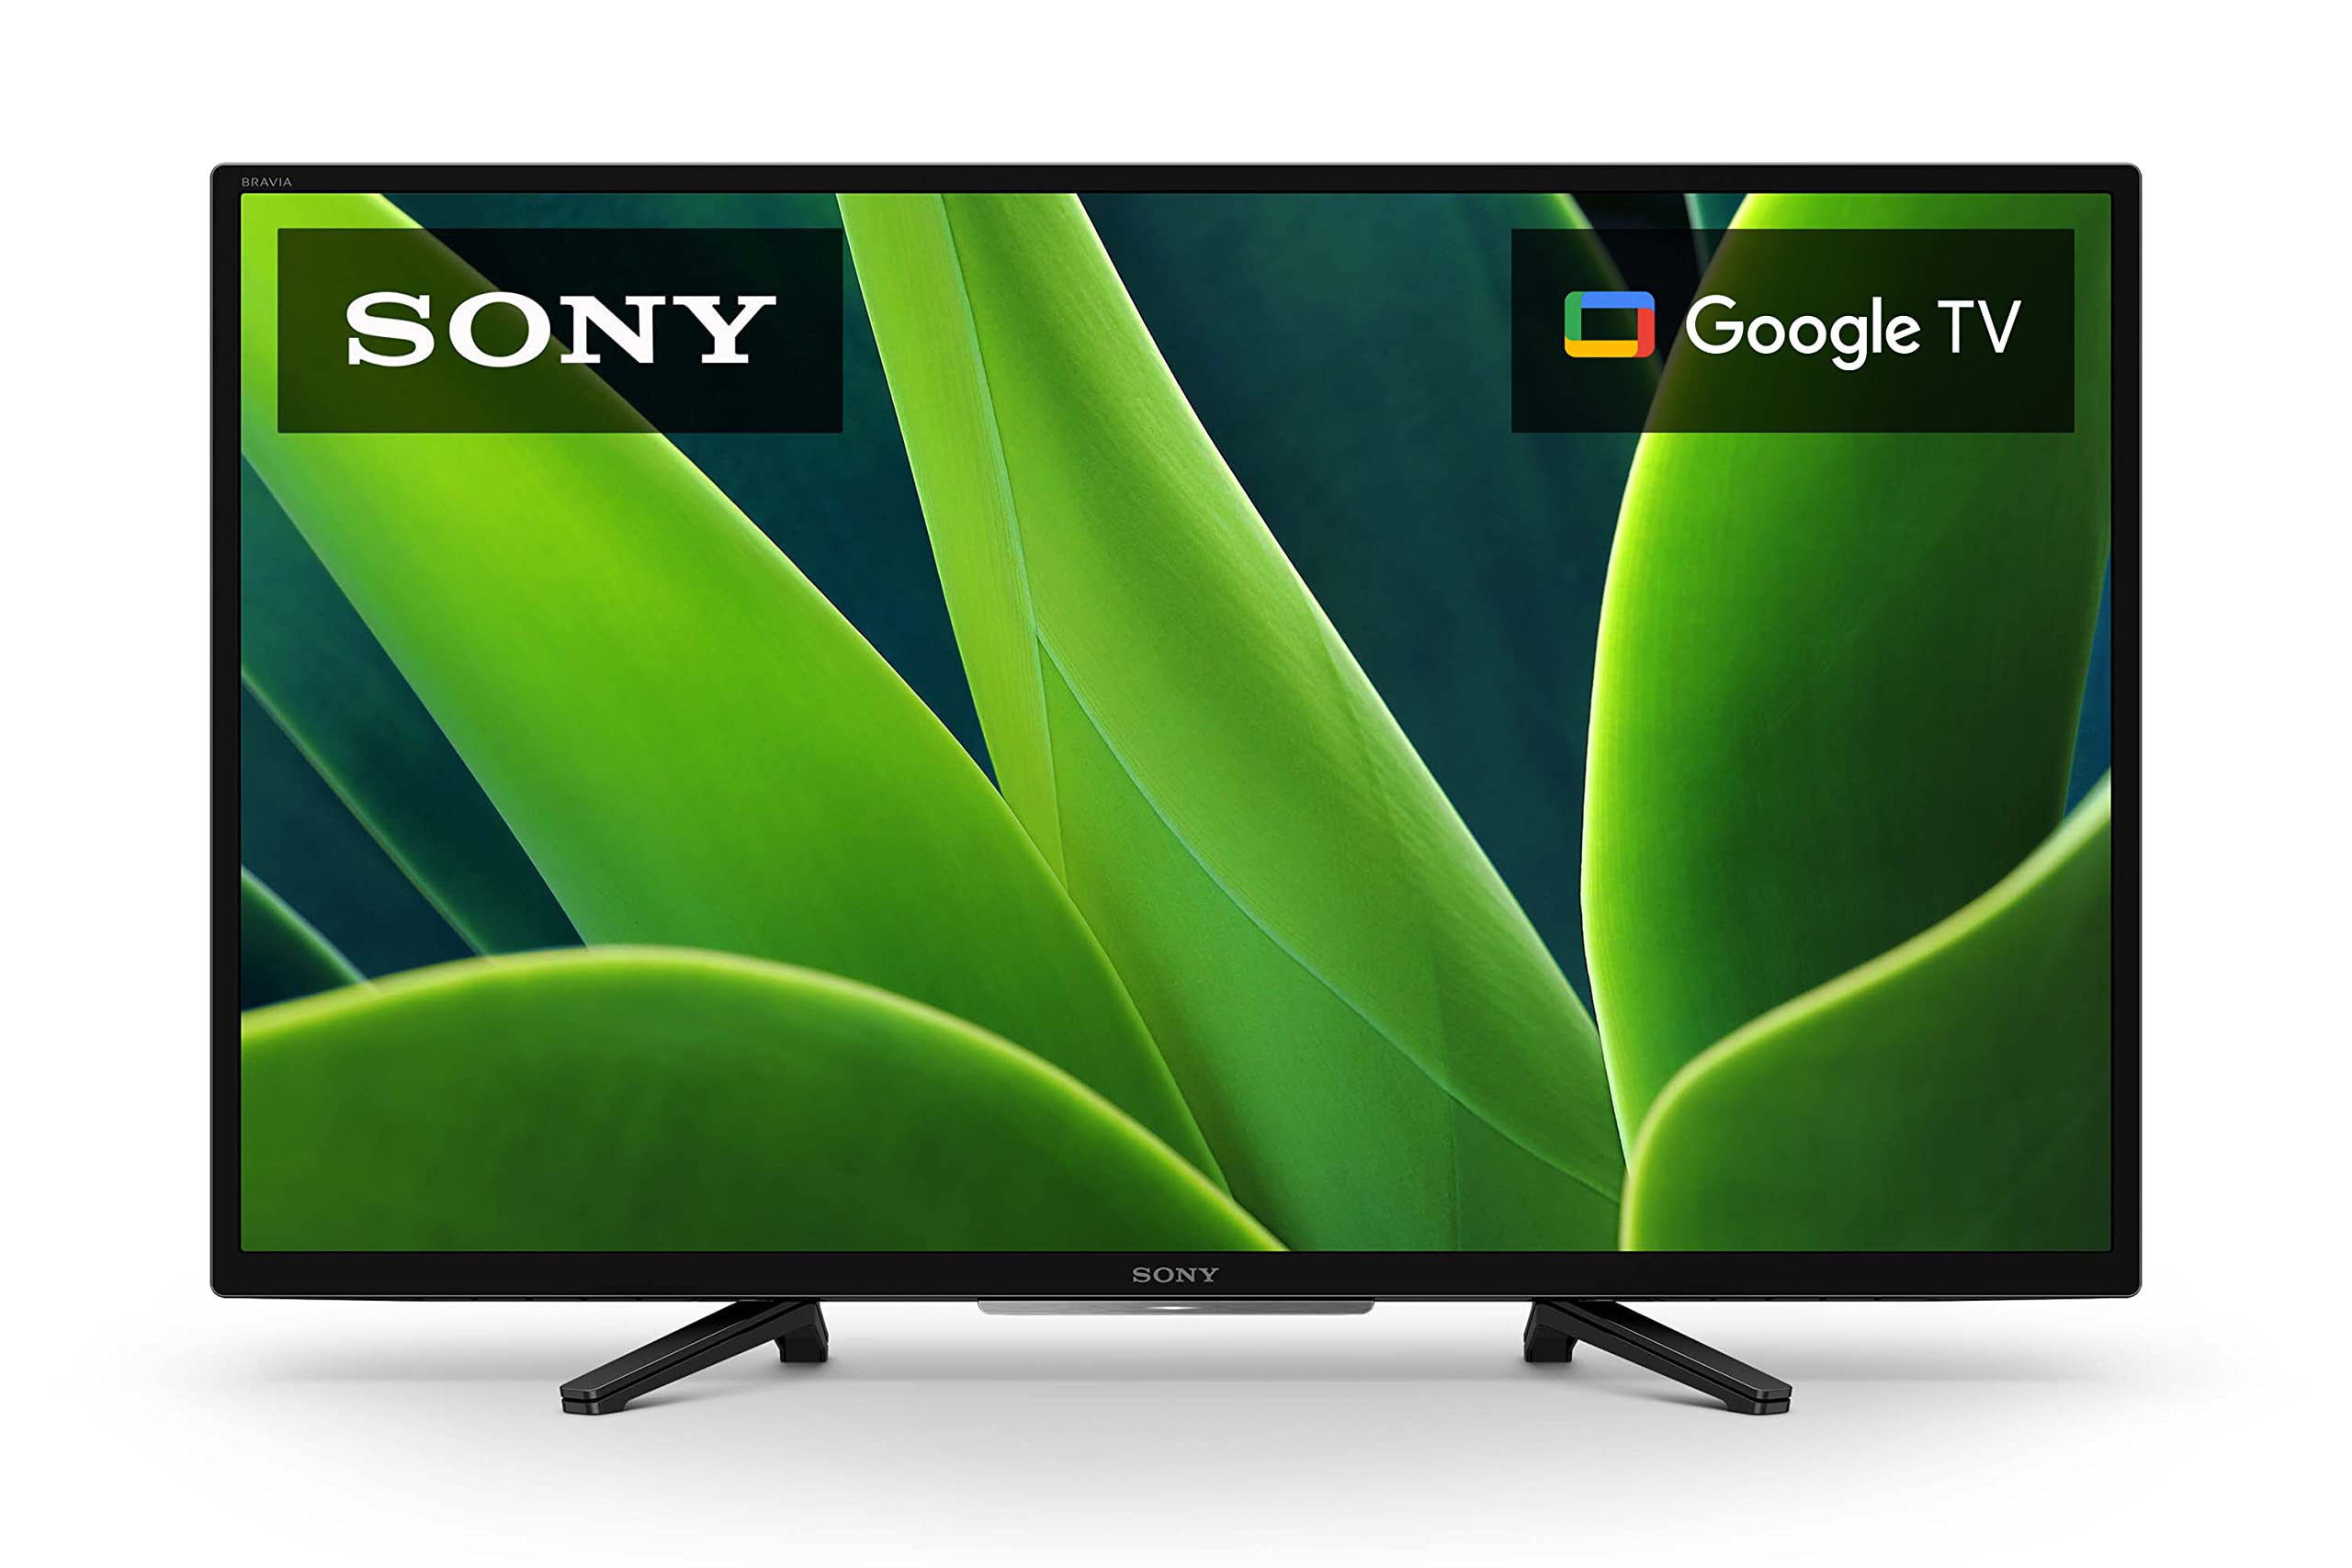 Sony 32-дюймовый HD-телевизор 720p HD LED HDR серии W830K с Google TV и Google Assistant — модель 2022 года